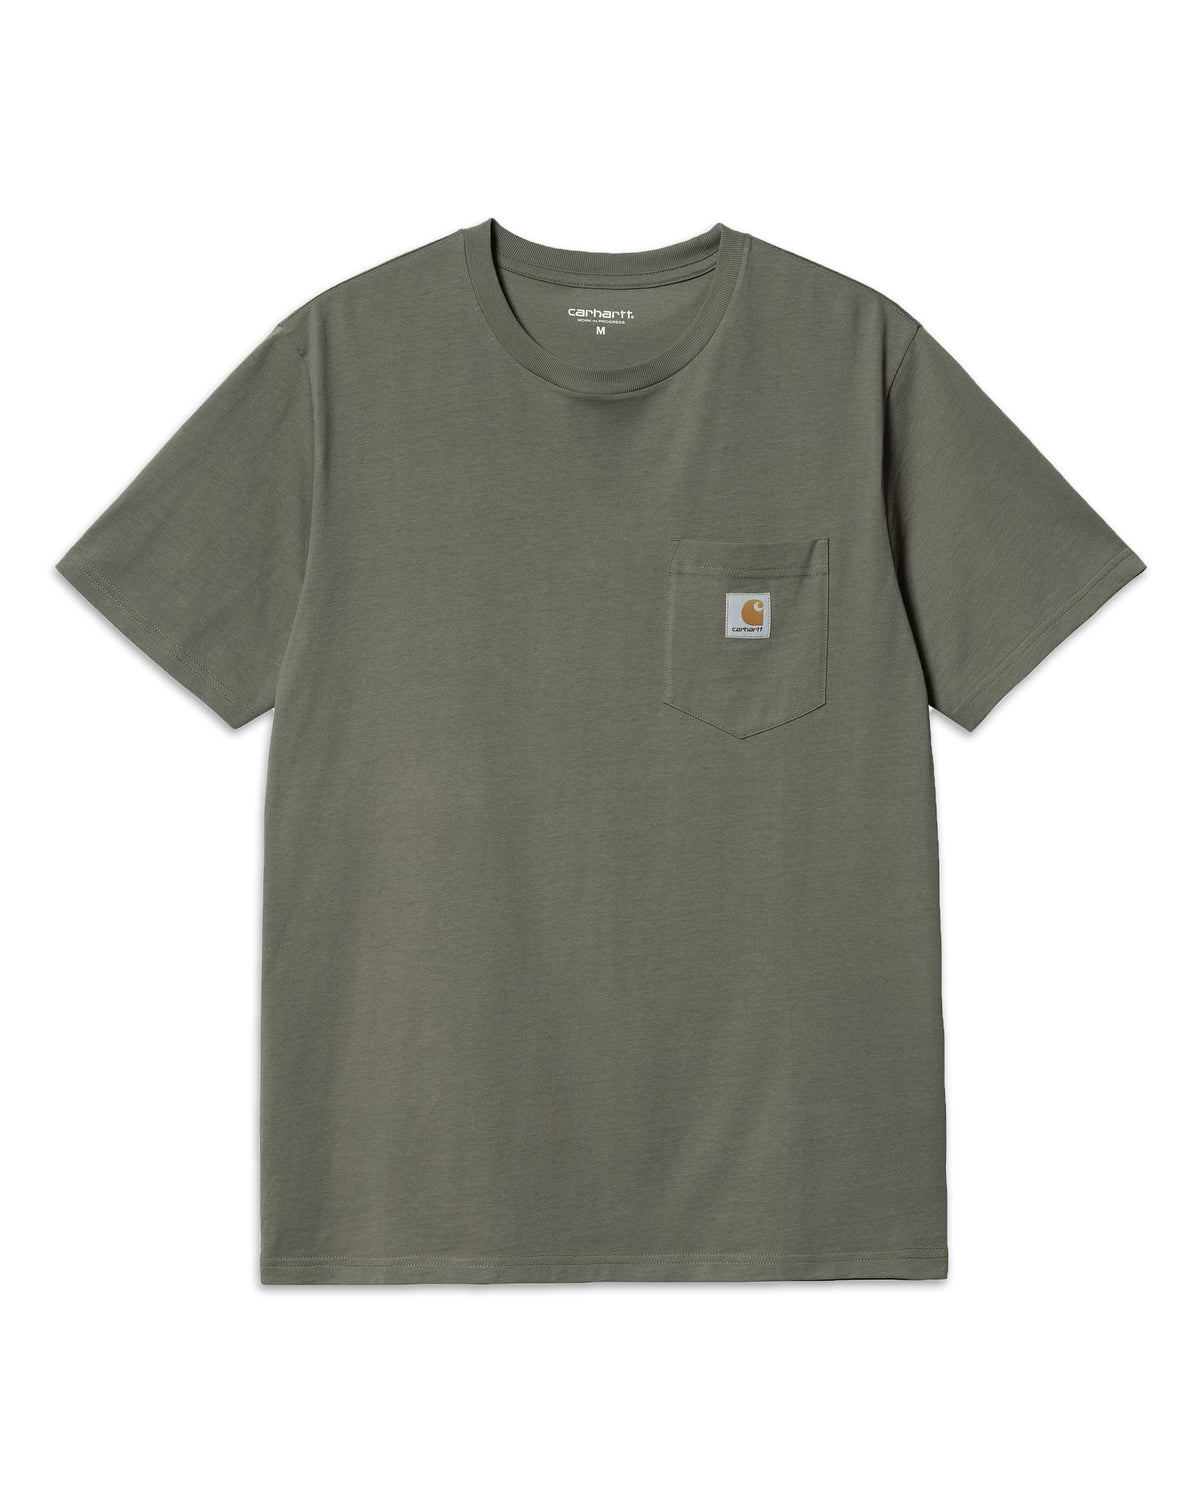 Carhartt Wip Pocket T-shirt Smoke Green